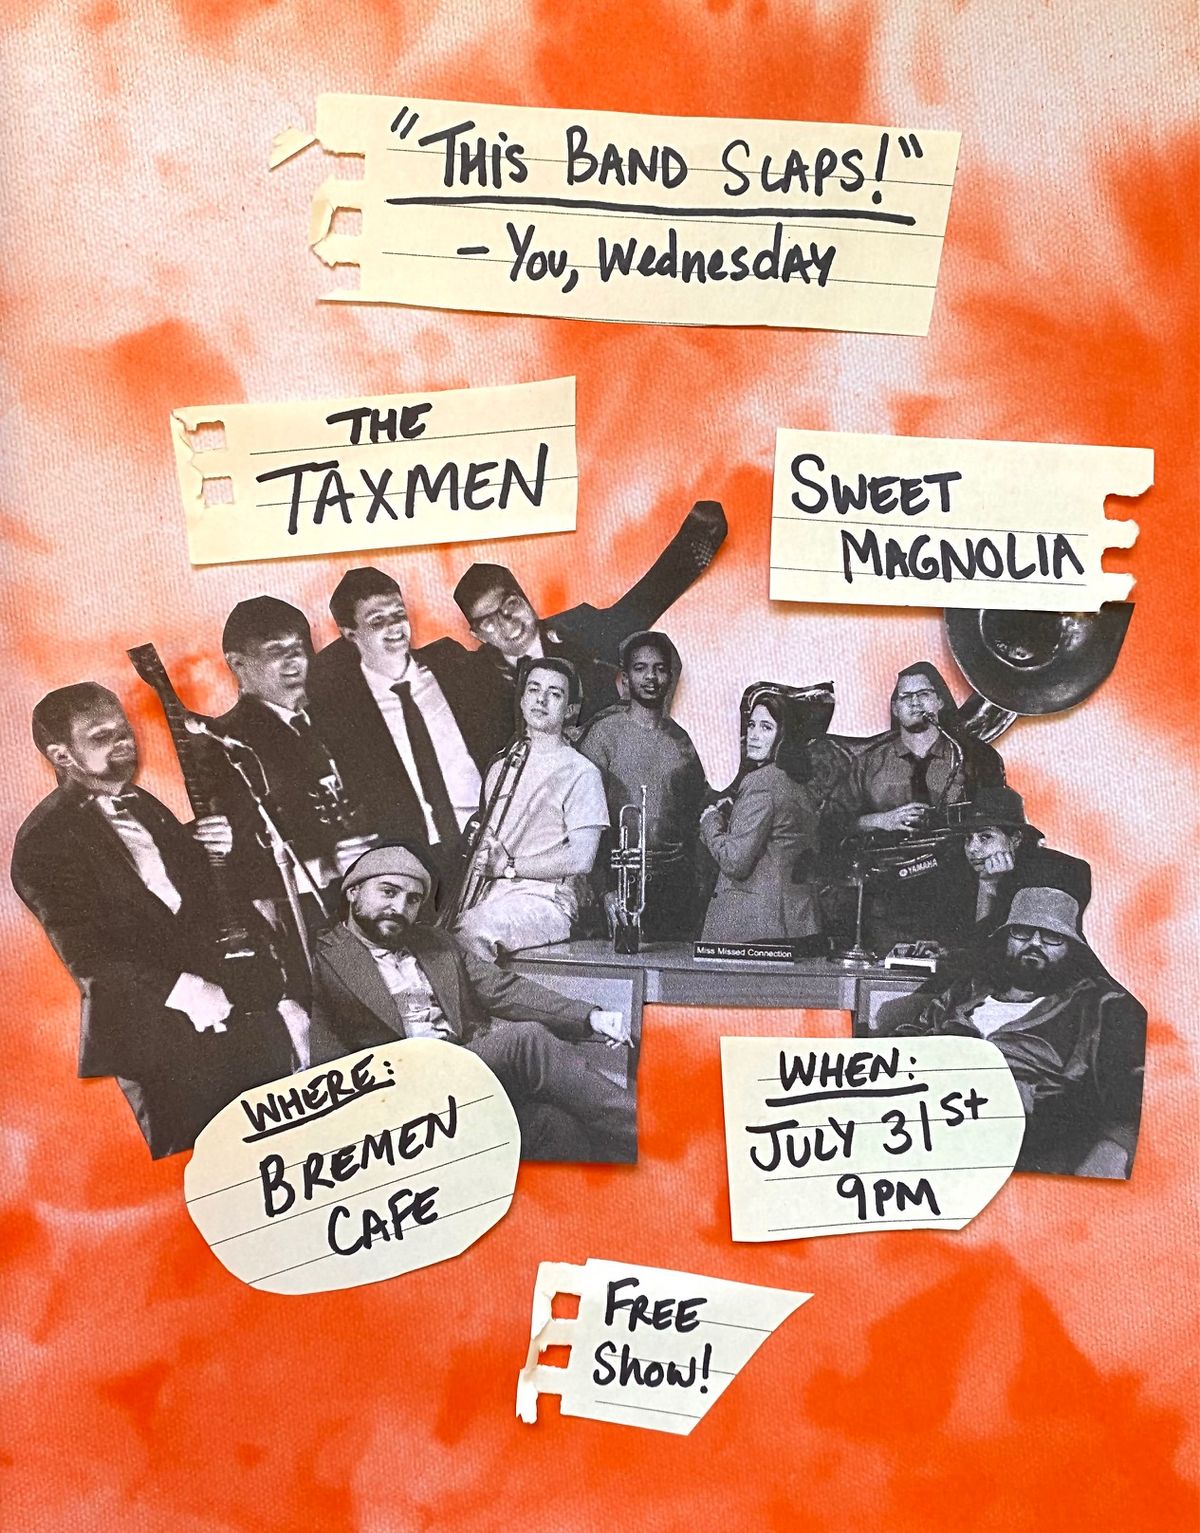 The Taxmen + Sweet Magnolia Live at Bremen's Cafe